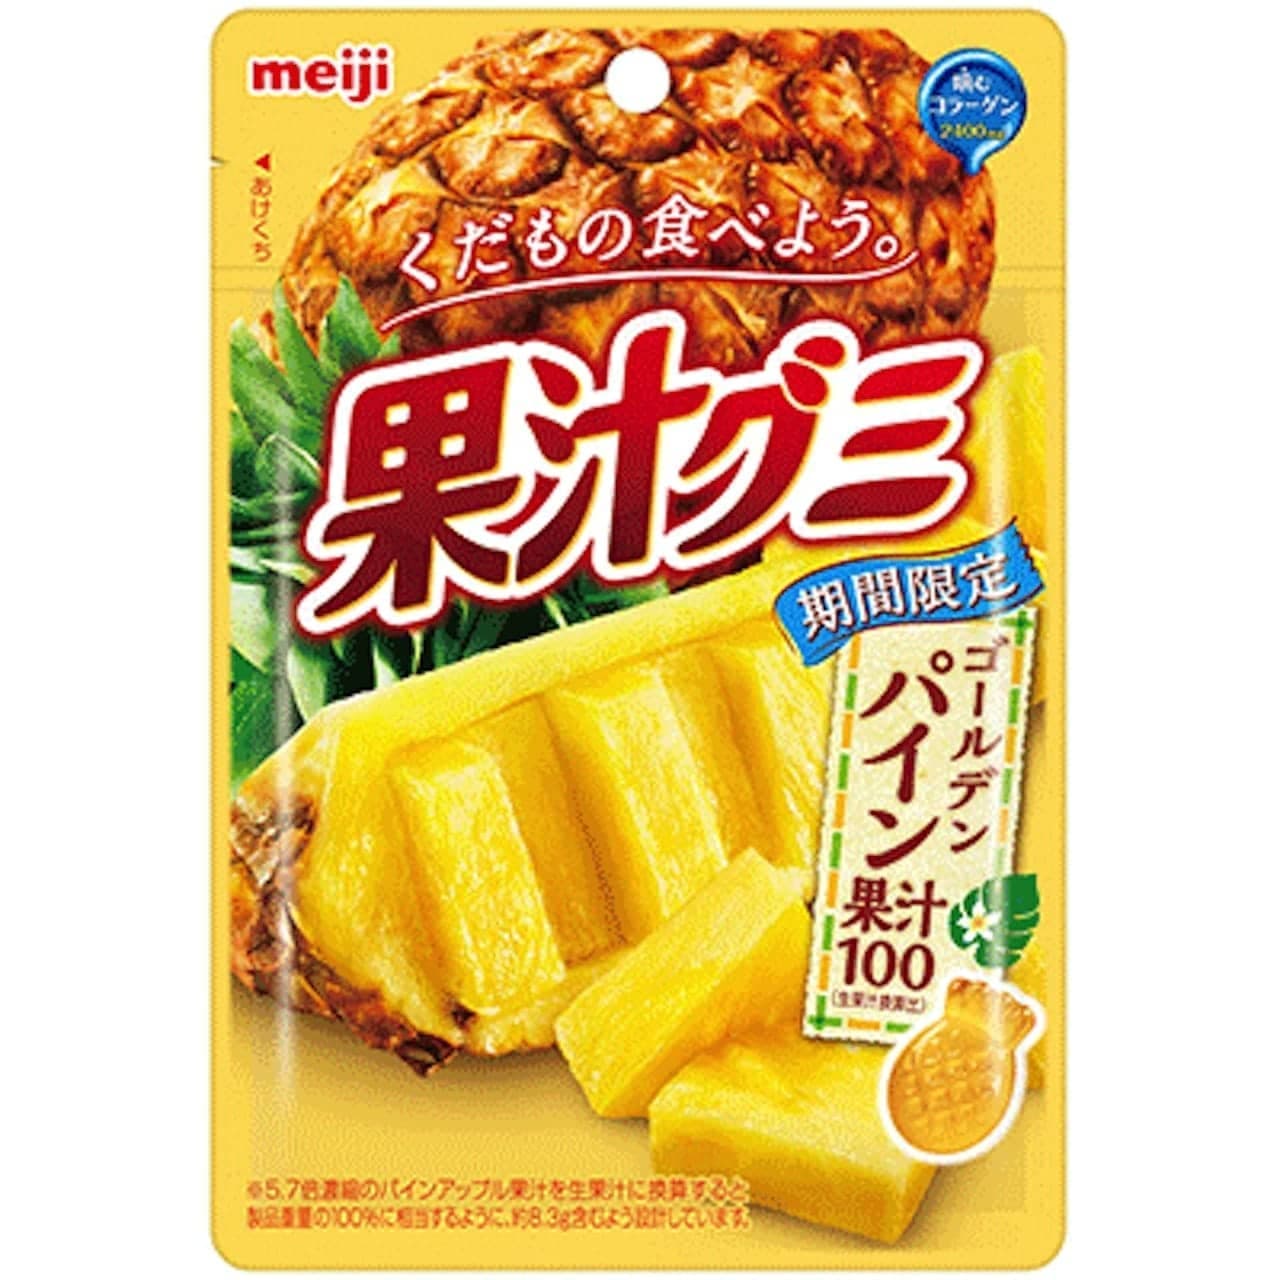 "Fruit juice gummy golden pine" for a limited time